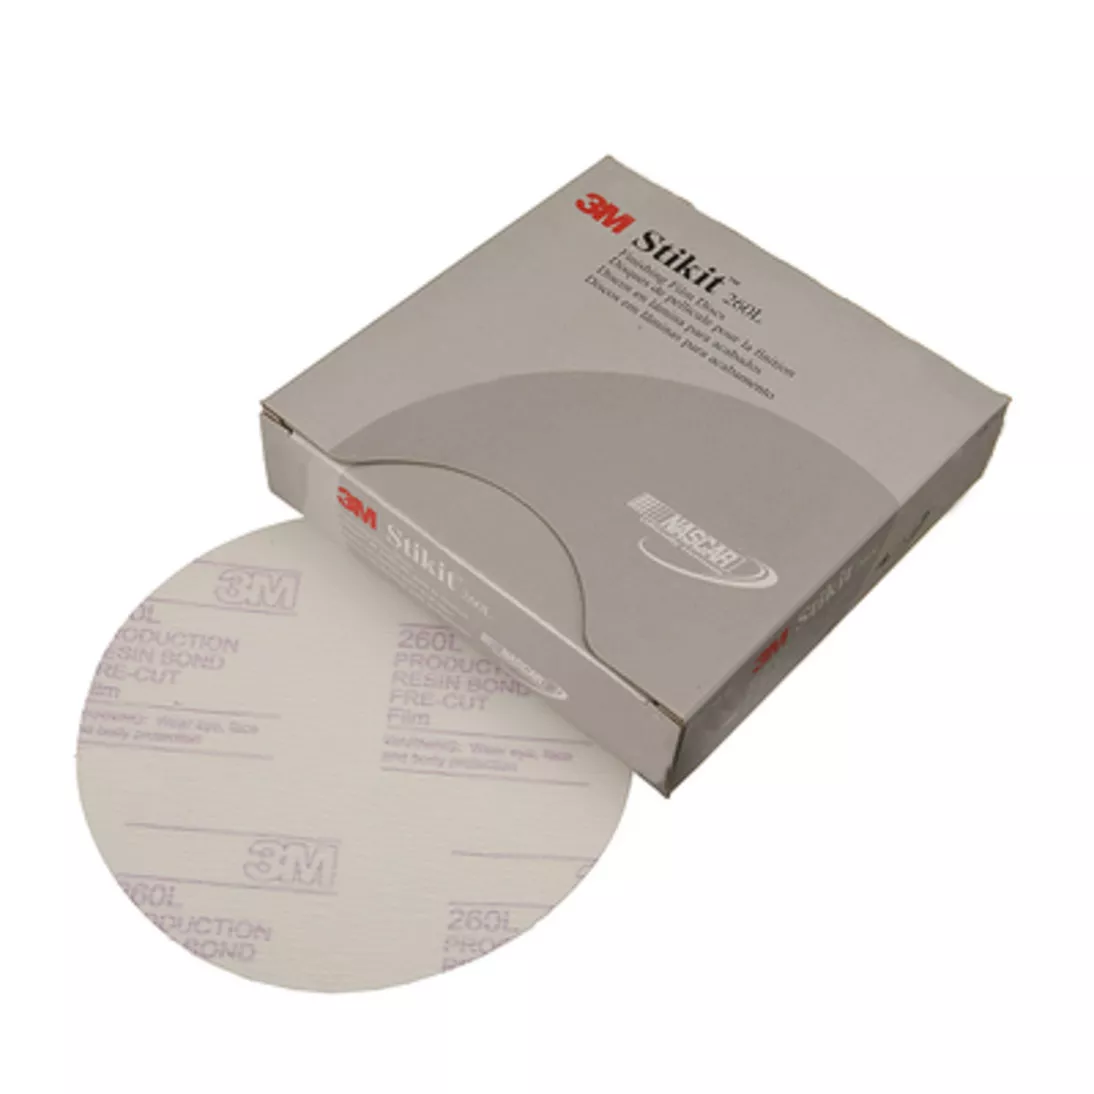 3M™ Stikit™ Finishing Film Abrasive Disc 260L, 01318, 6 in, P1200, 100
discs per carton, 4 cartons per case